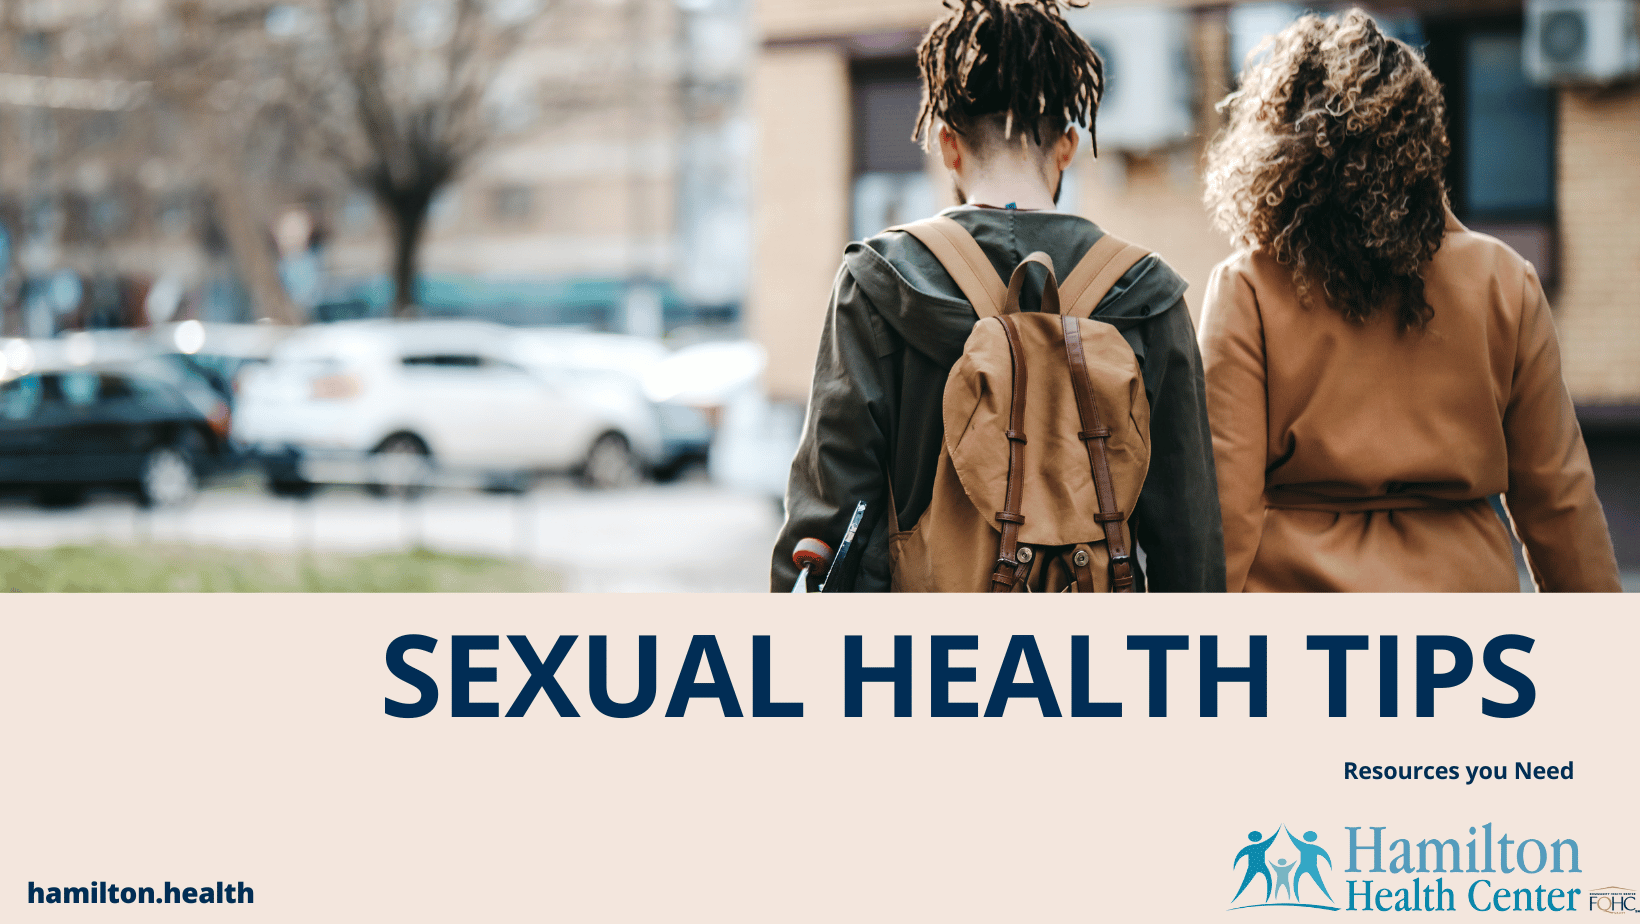 Top Sexual Health Tips - Hamilton Health photo